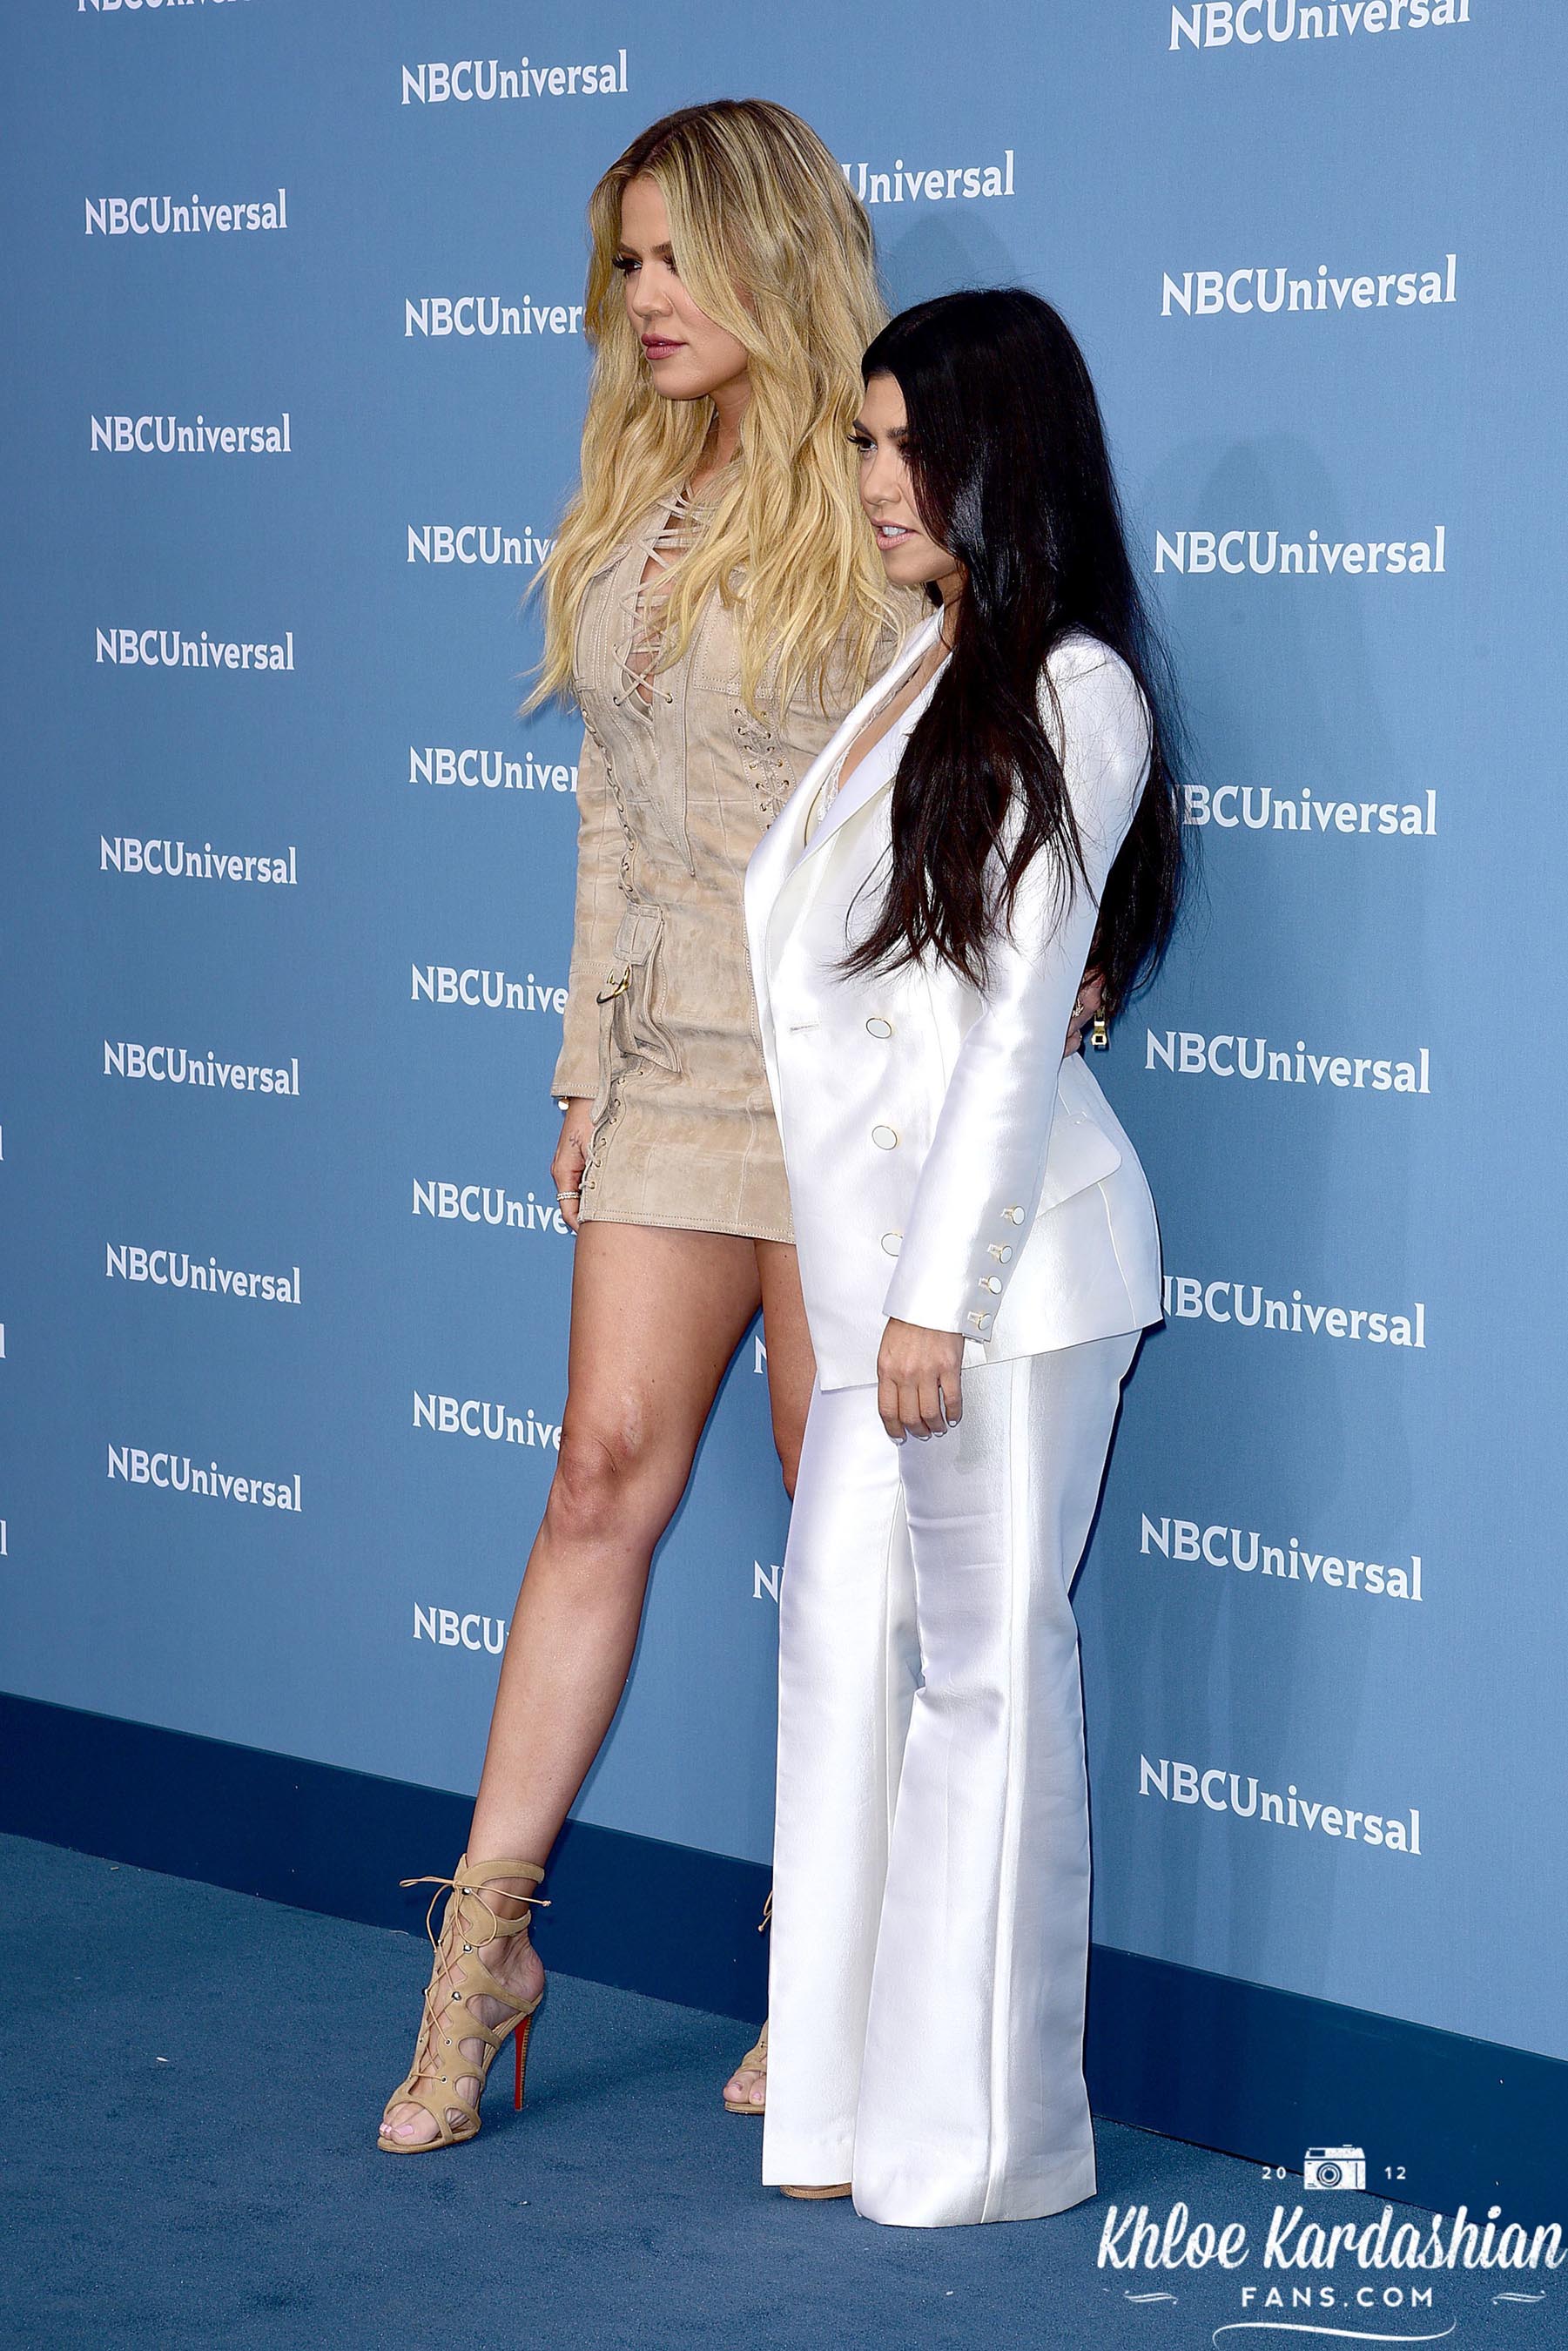 Khloe Kardashian attends NBCUniversal 2016 Upfront